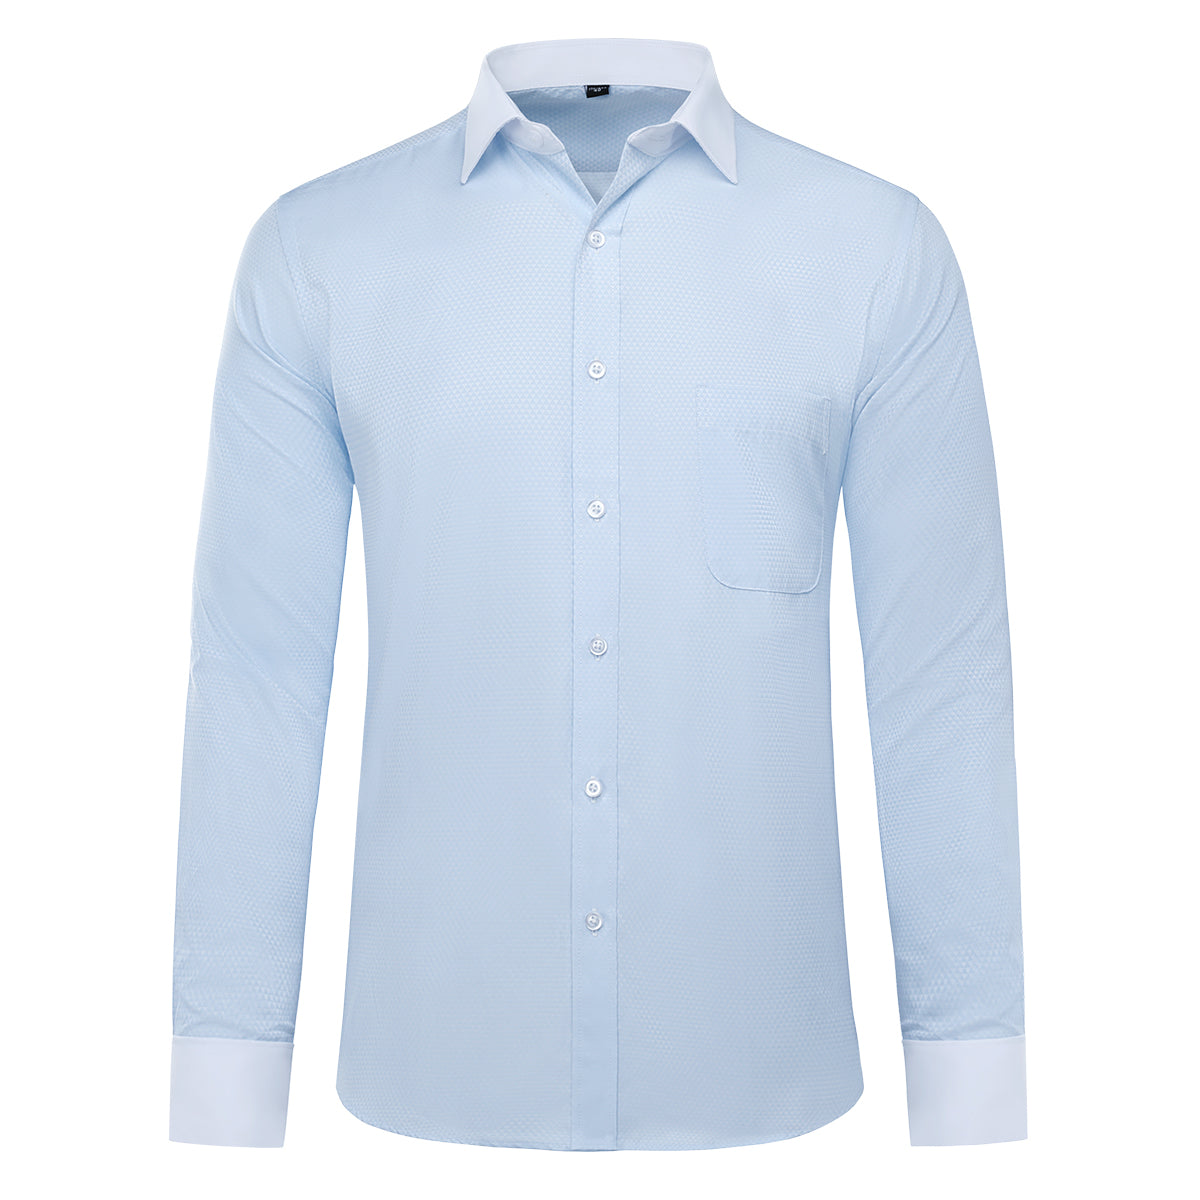 Men's Dress Shirt Slim Fit Button Down Stripe Checked Shirt Light Blue